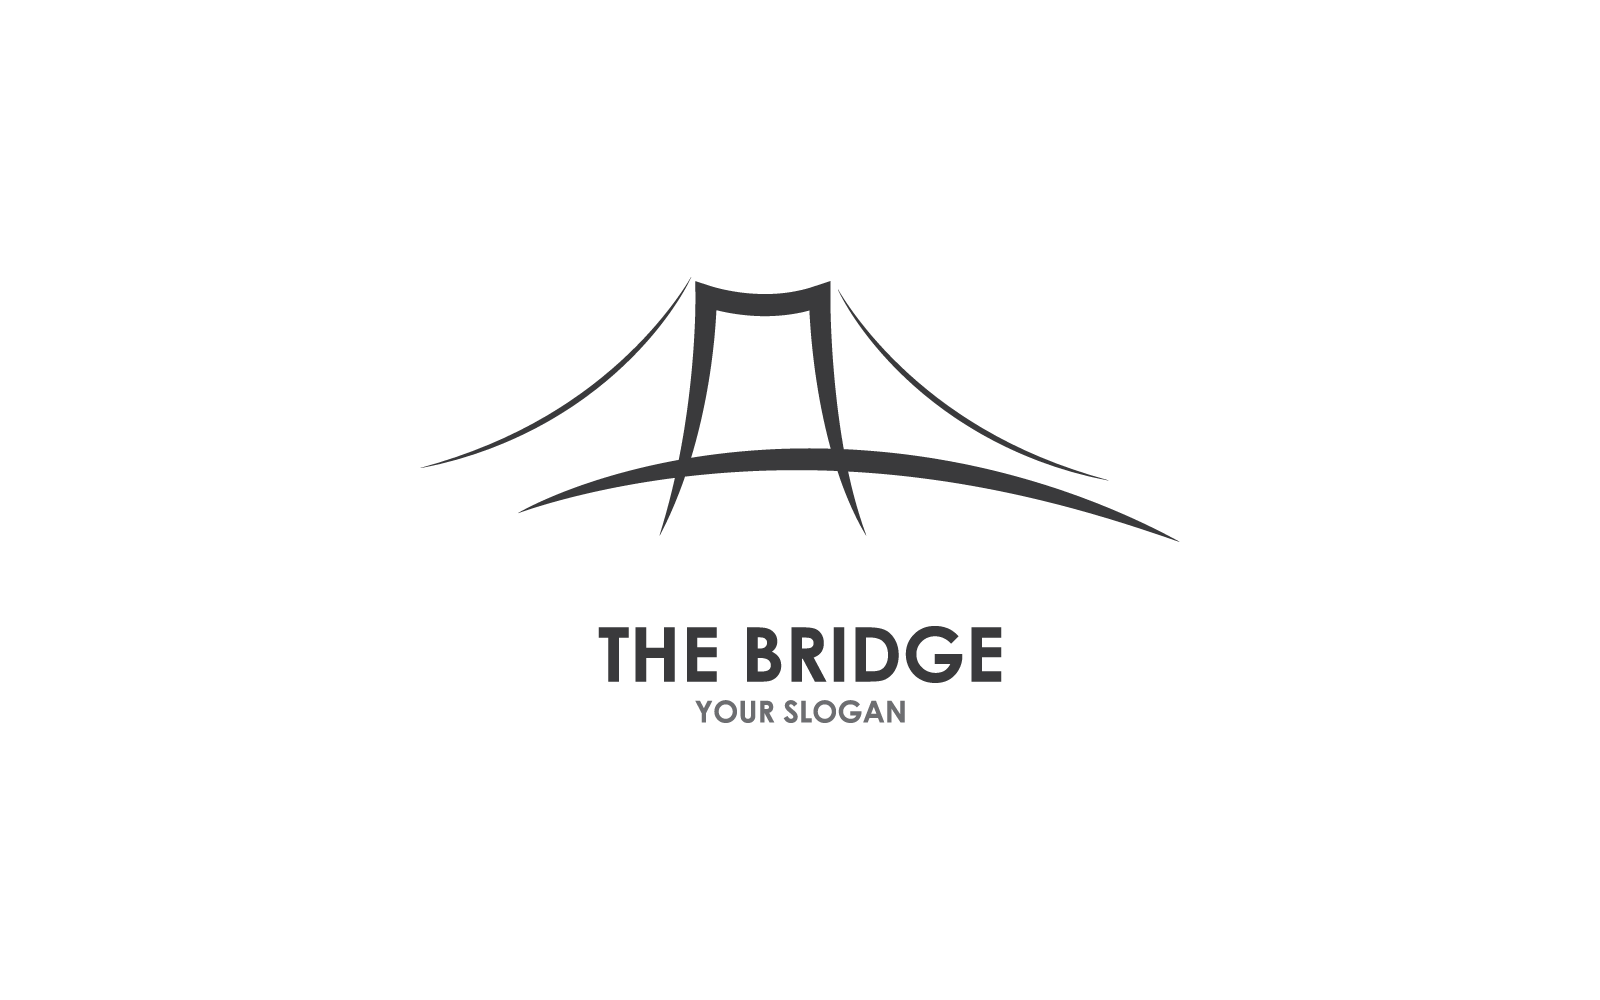 Bridge design ilustration logo vector template